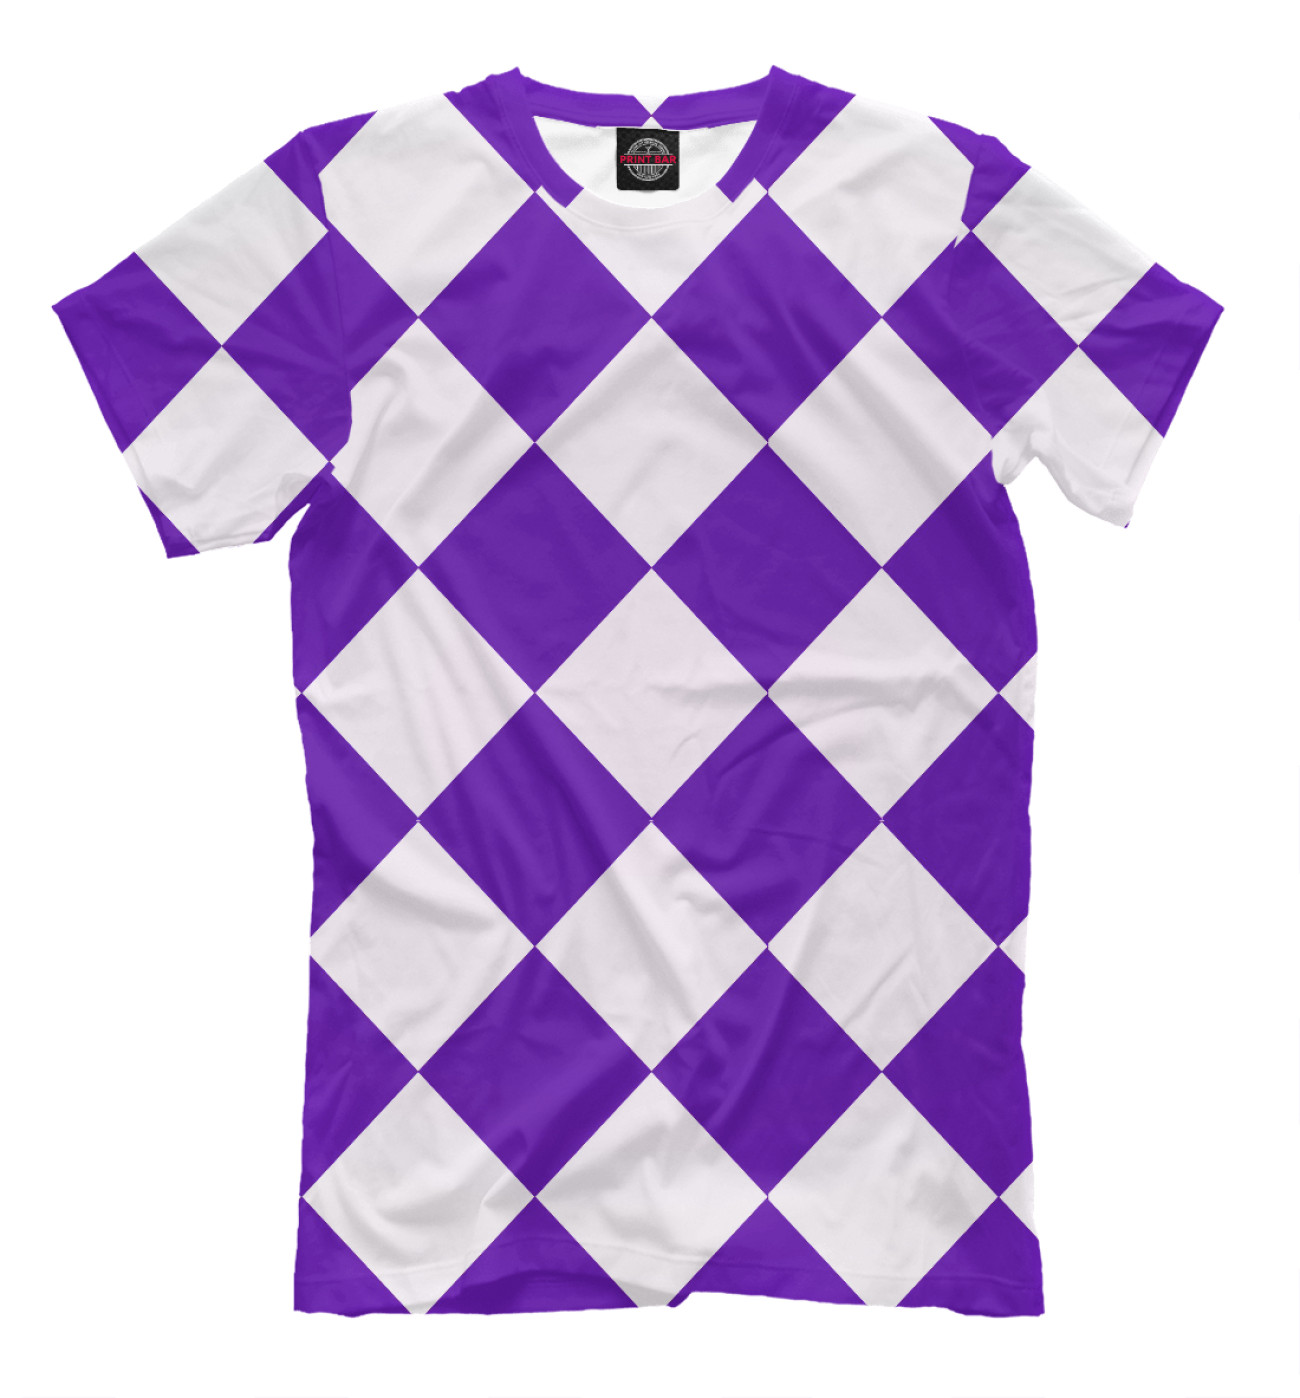 Мужская Футболка Фиолетовые кубики, артикул: GEO-715415-fut-2